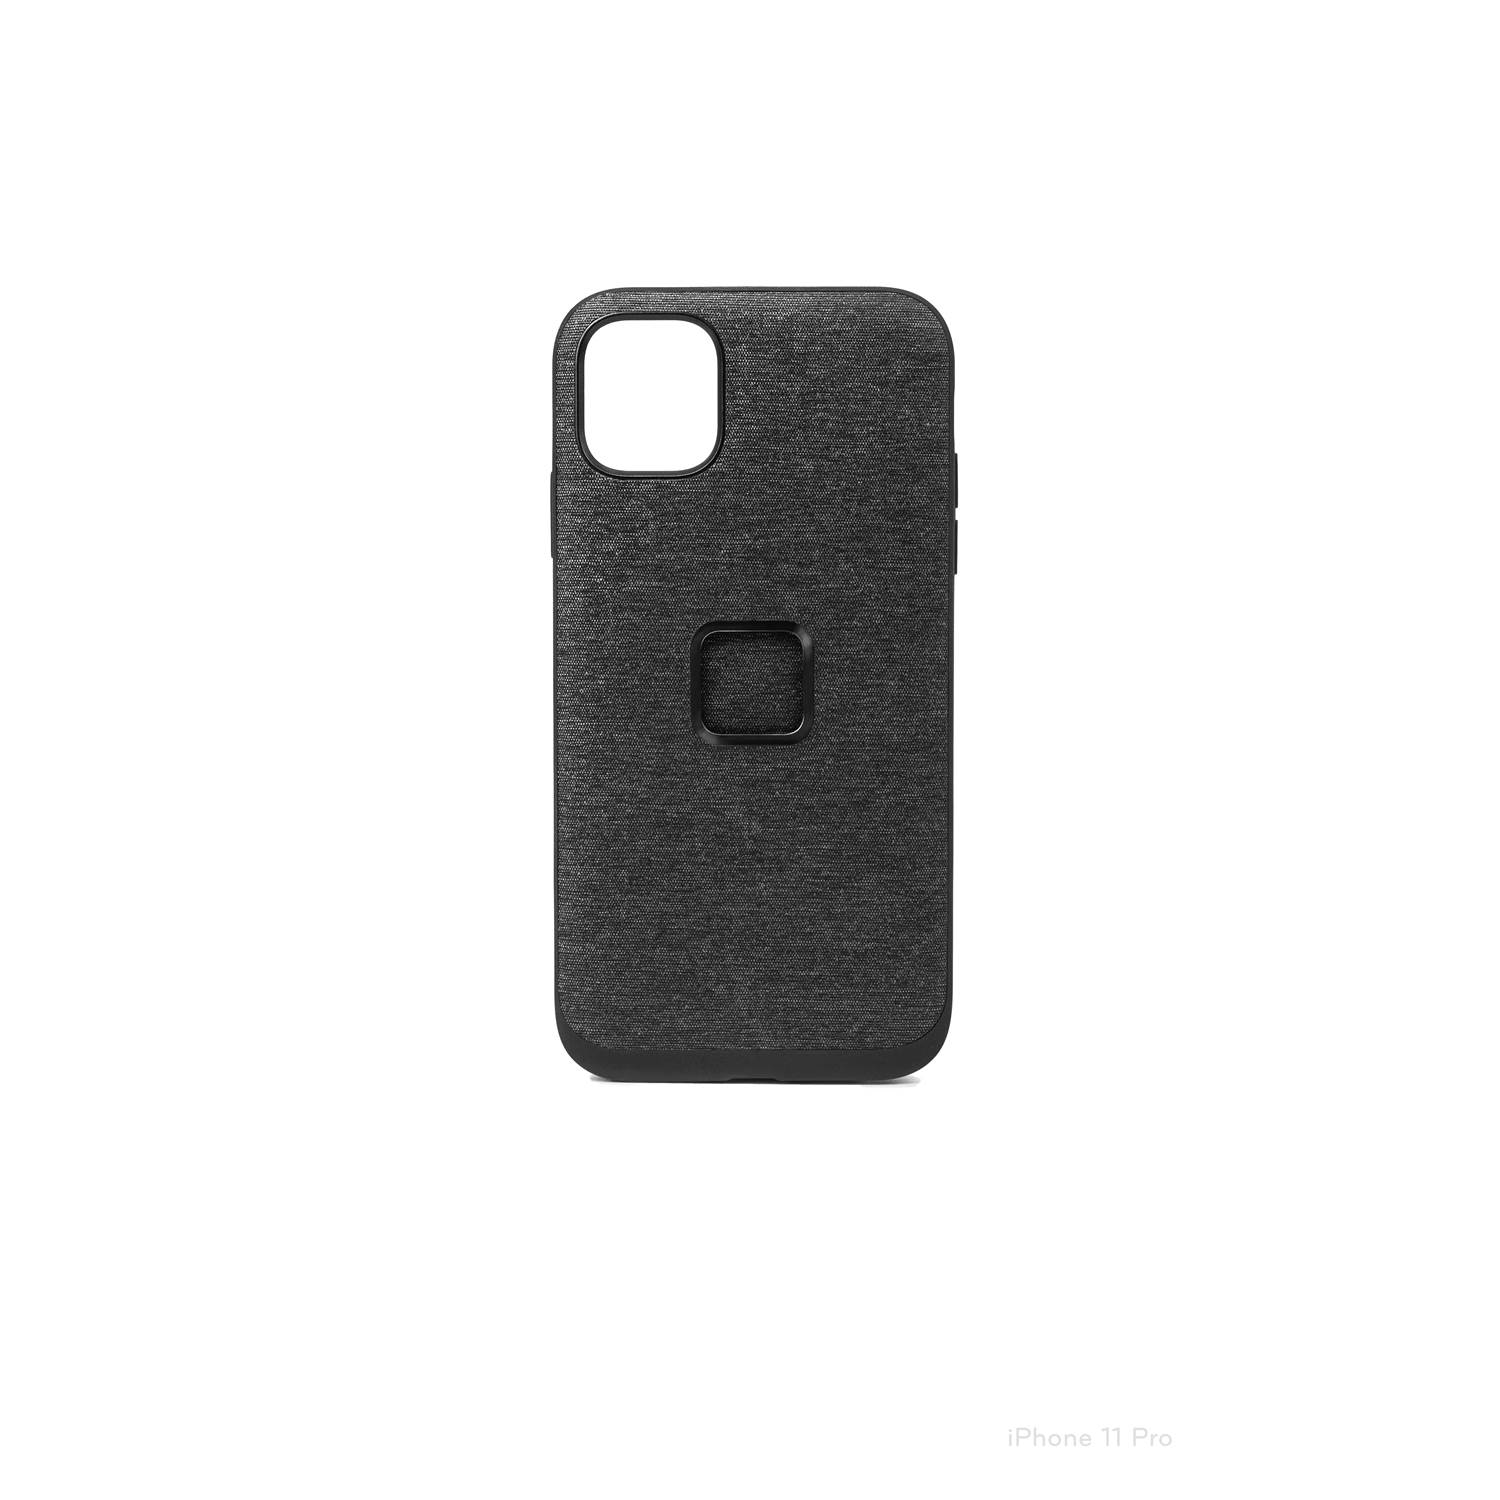 Peak Design Everyday Fabric Case iPhone 11 Pro - Charcoal